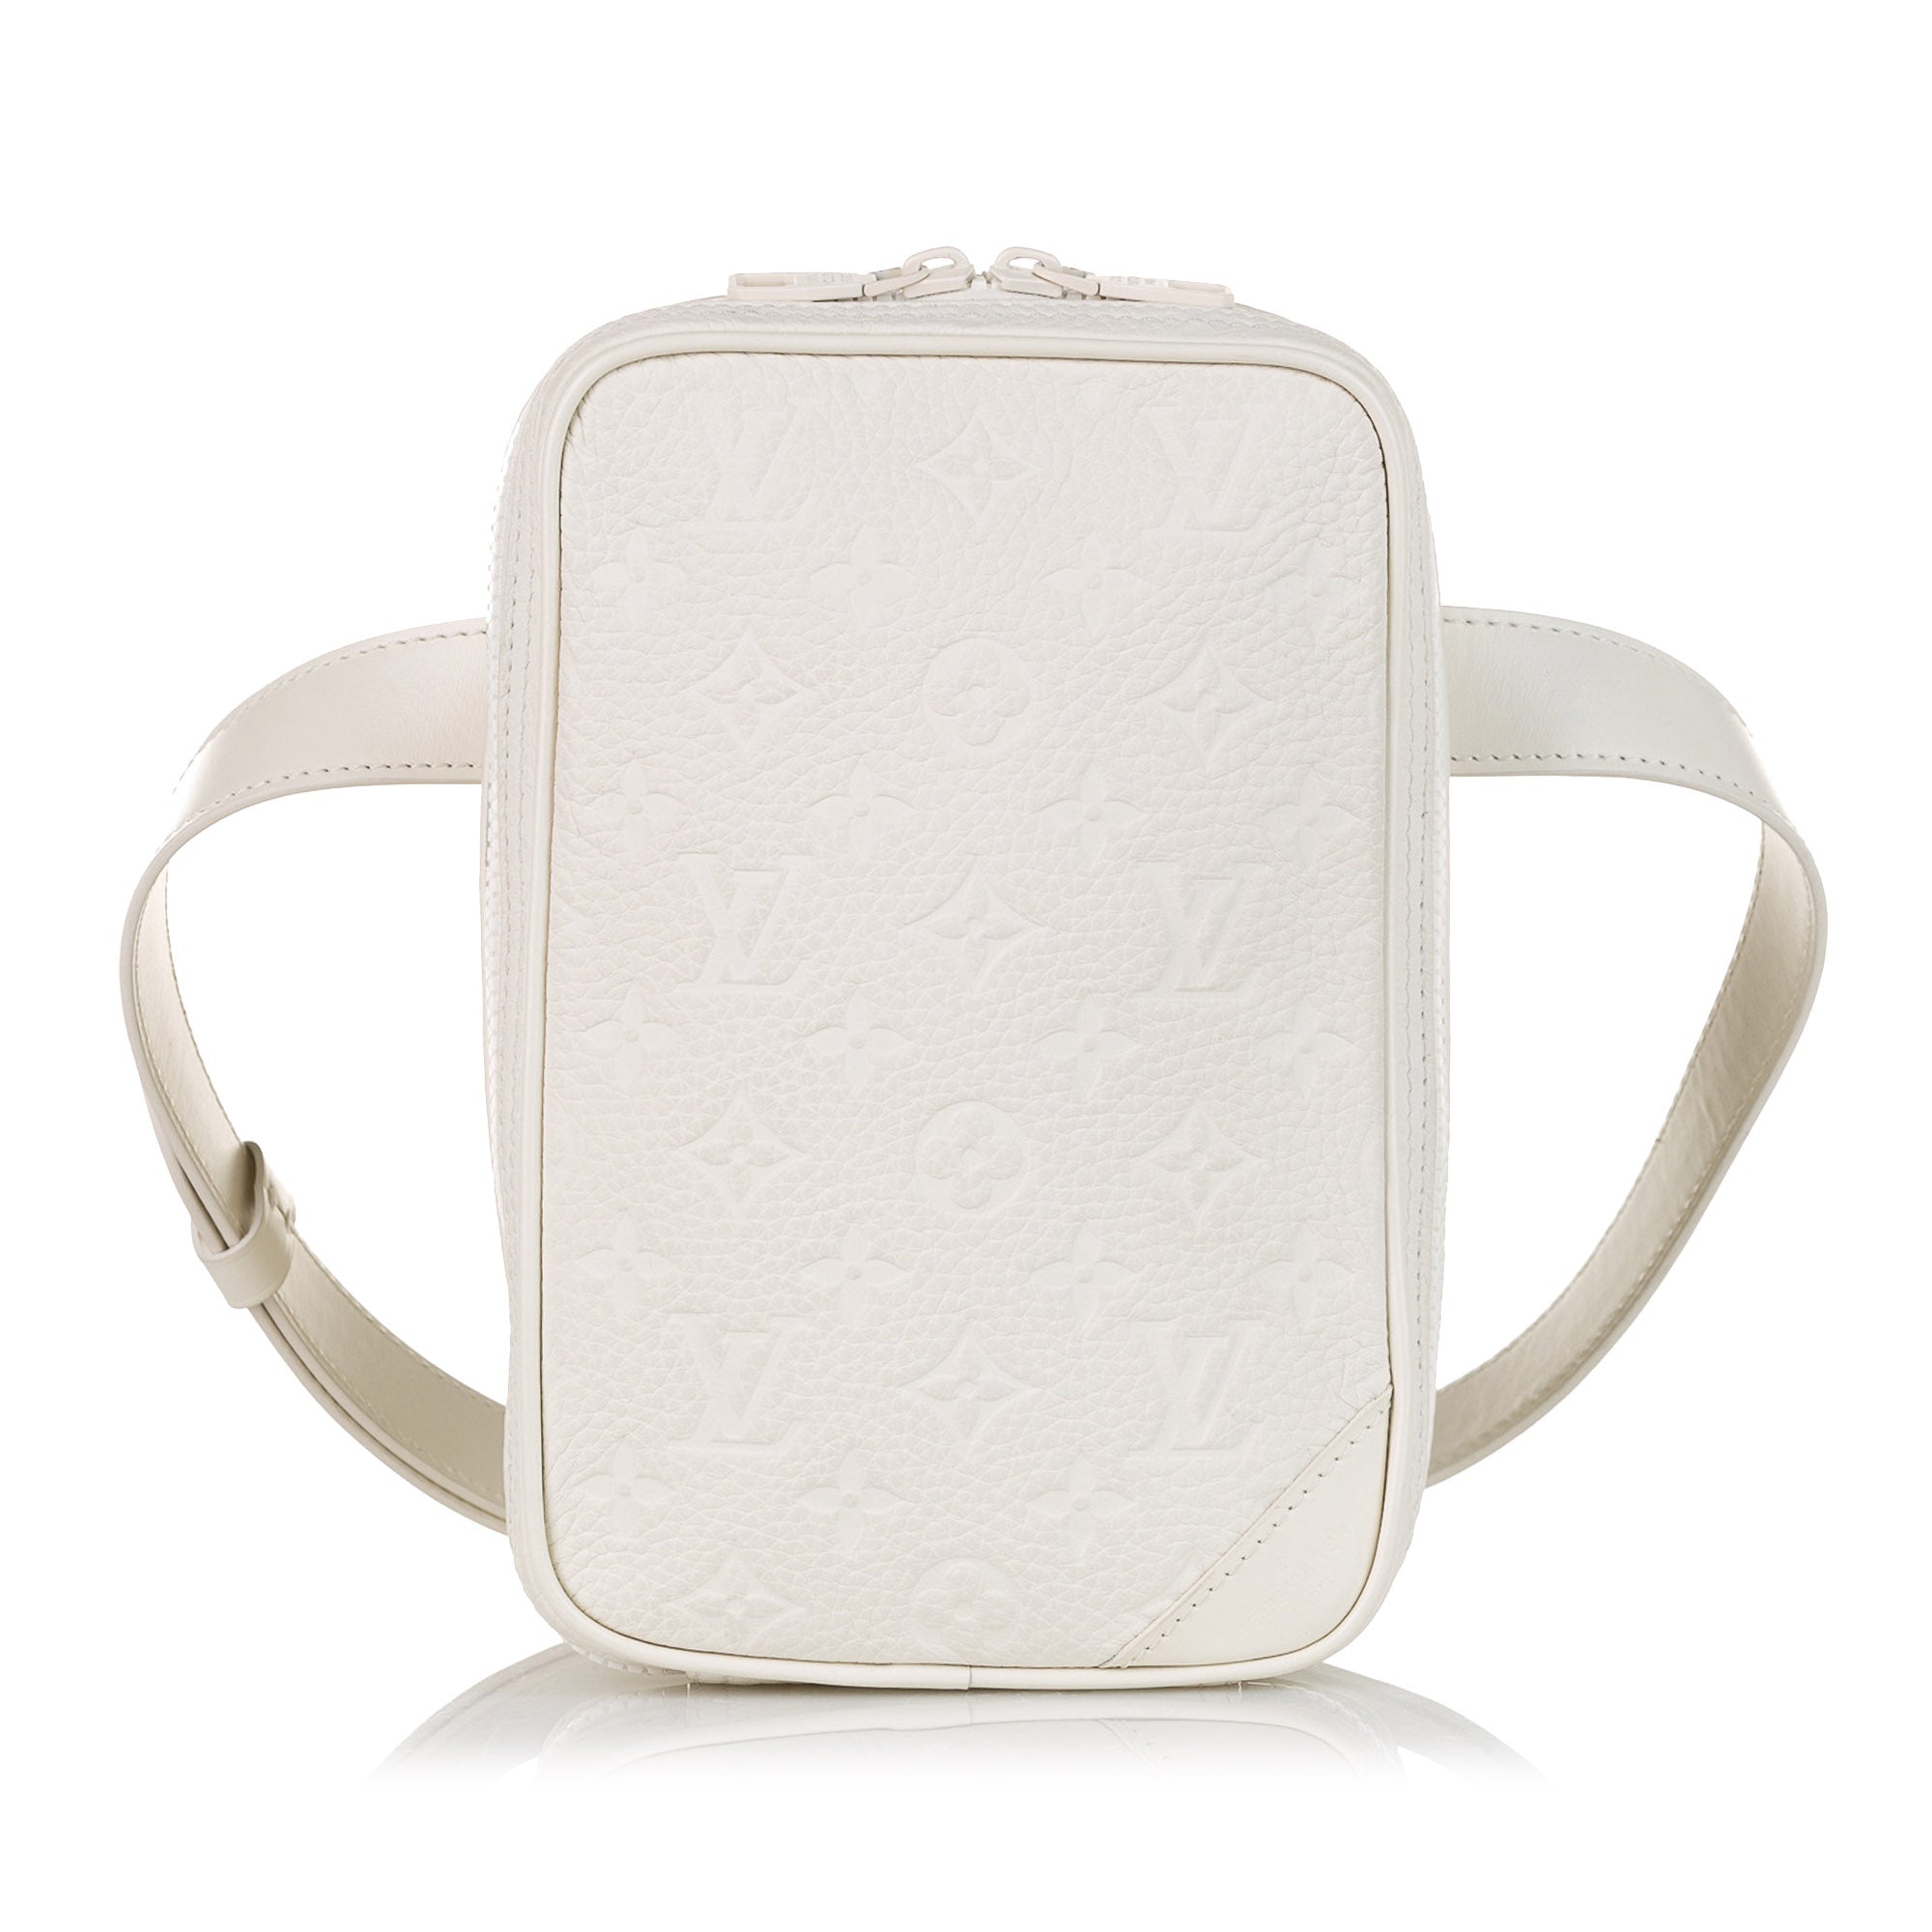 Louis Vuitton, Bags, Louis Vuitton Utility Crossbody Bag